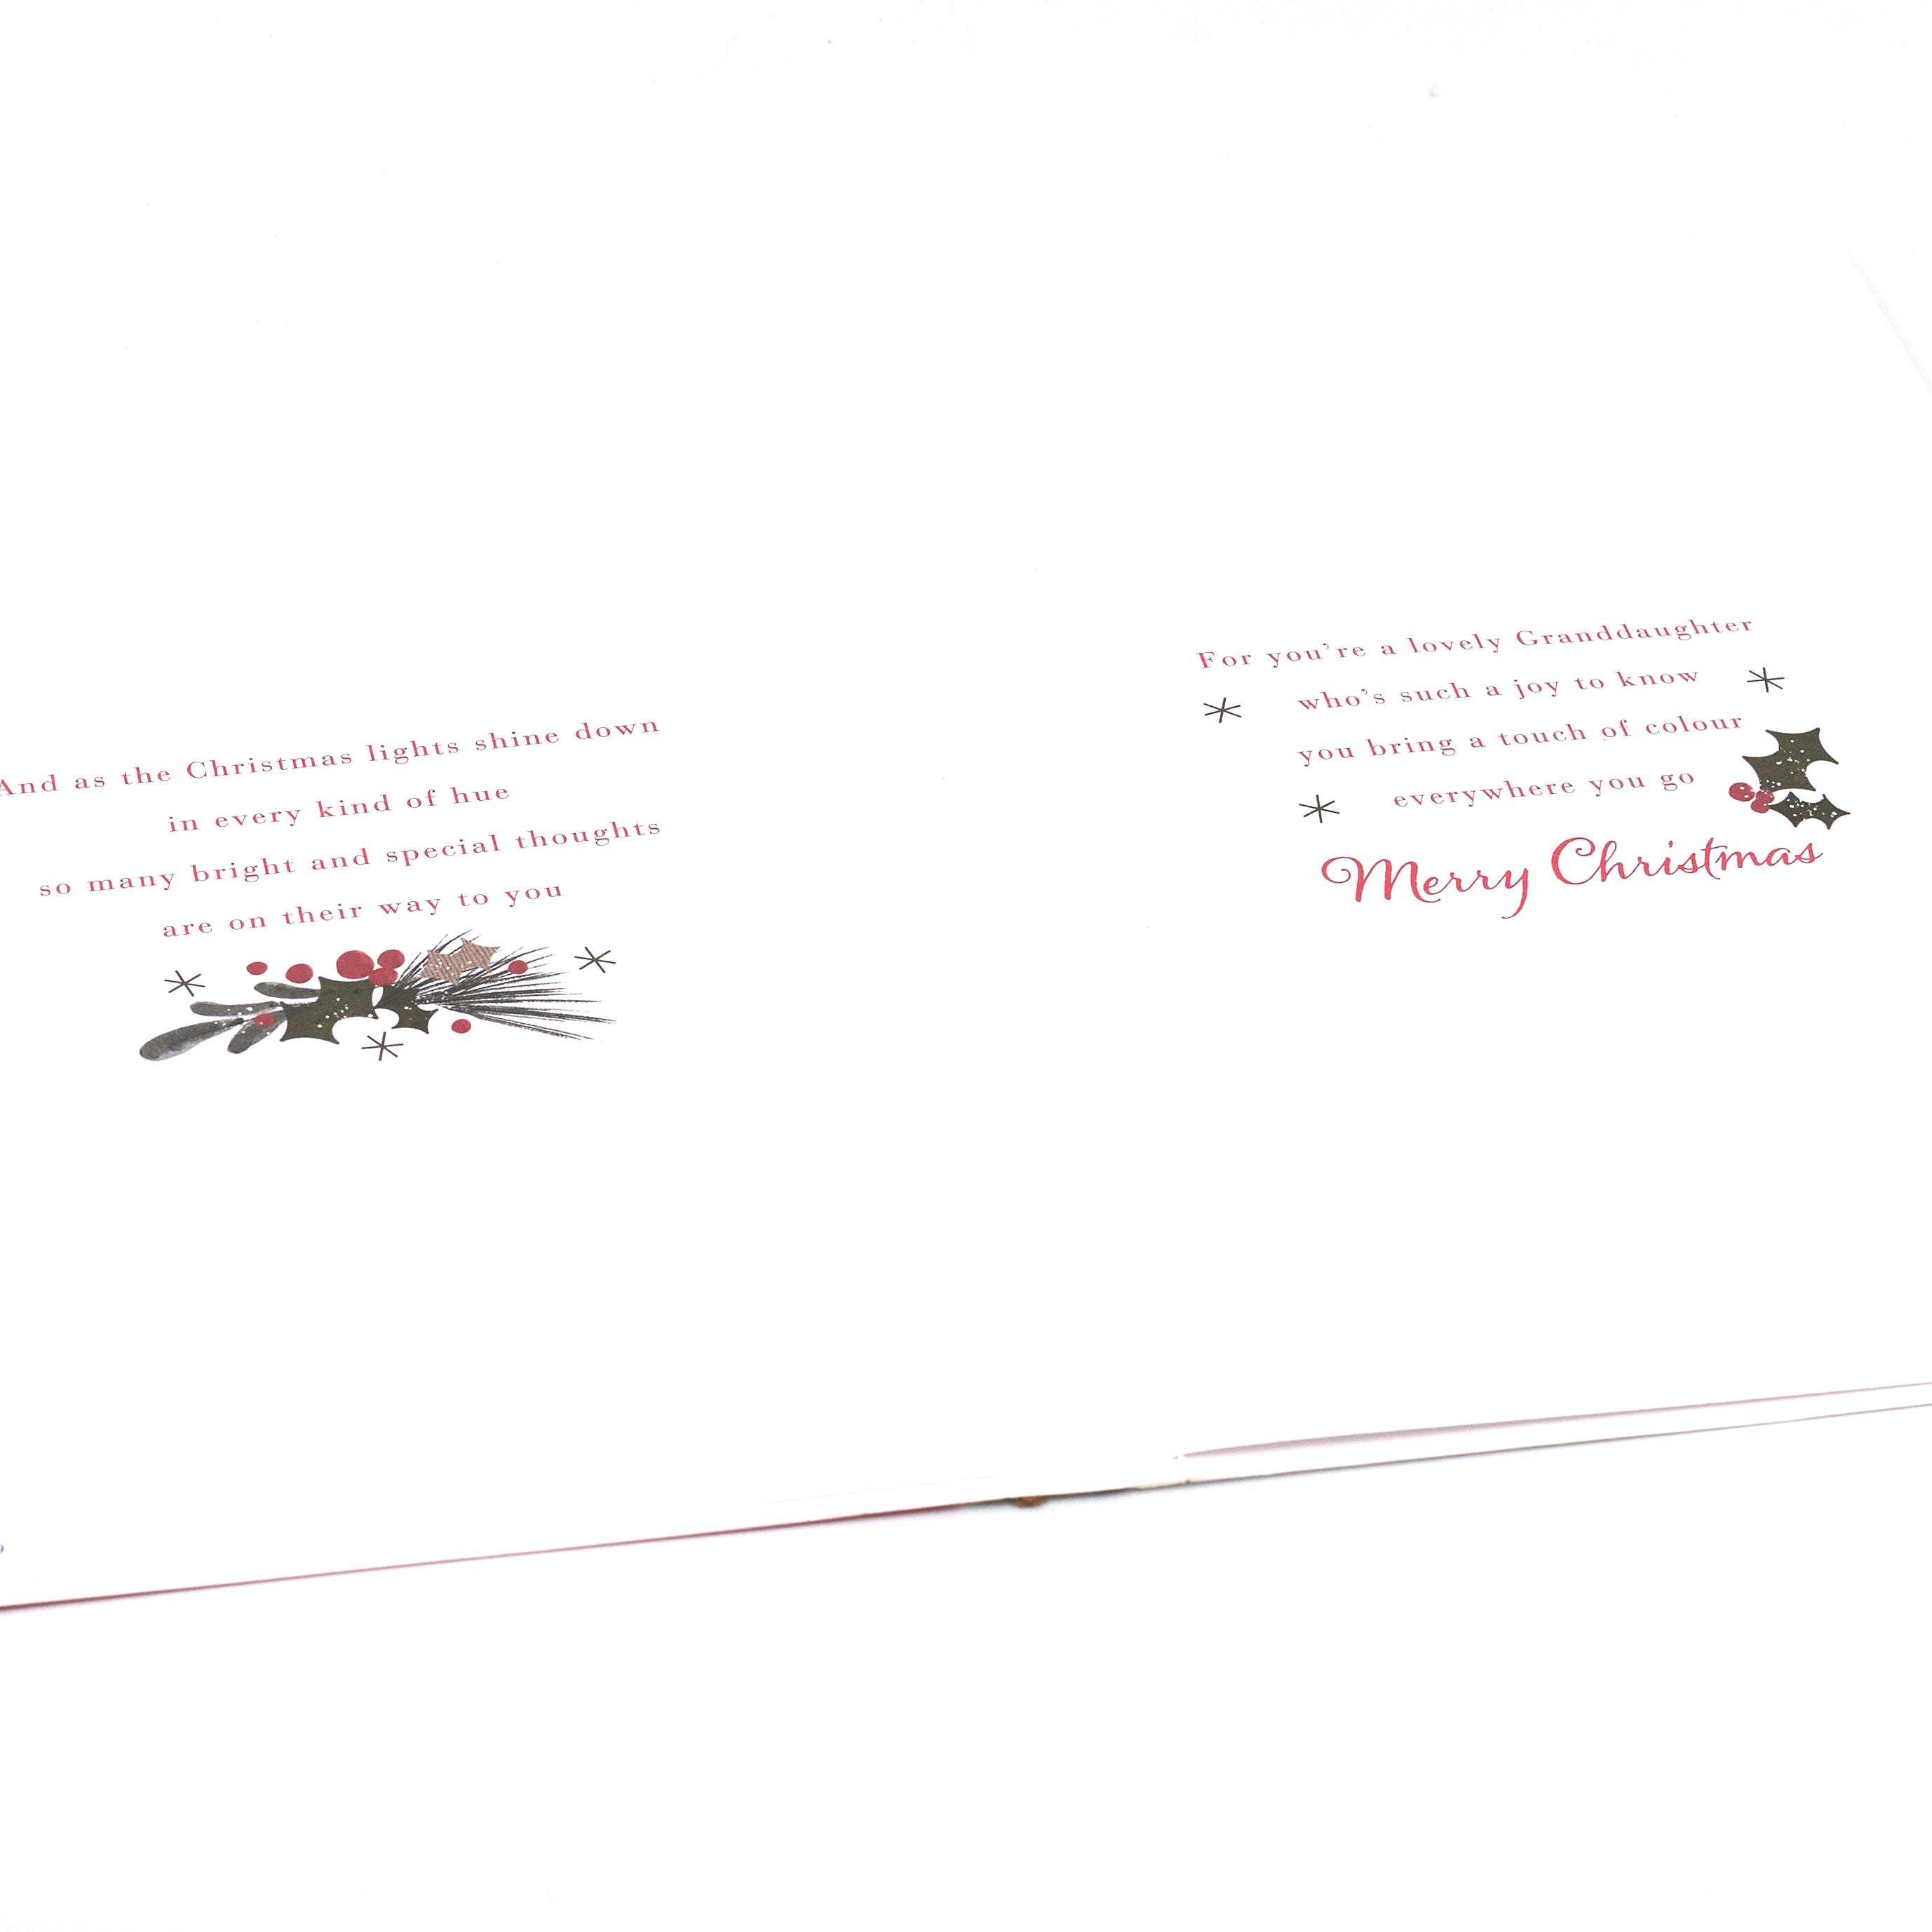 Christmas Card - Granddaughter, Traditional Christmas Verse